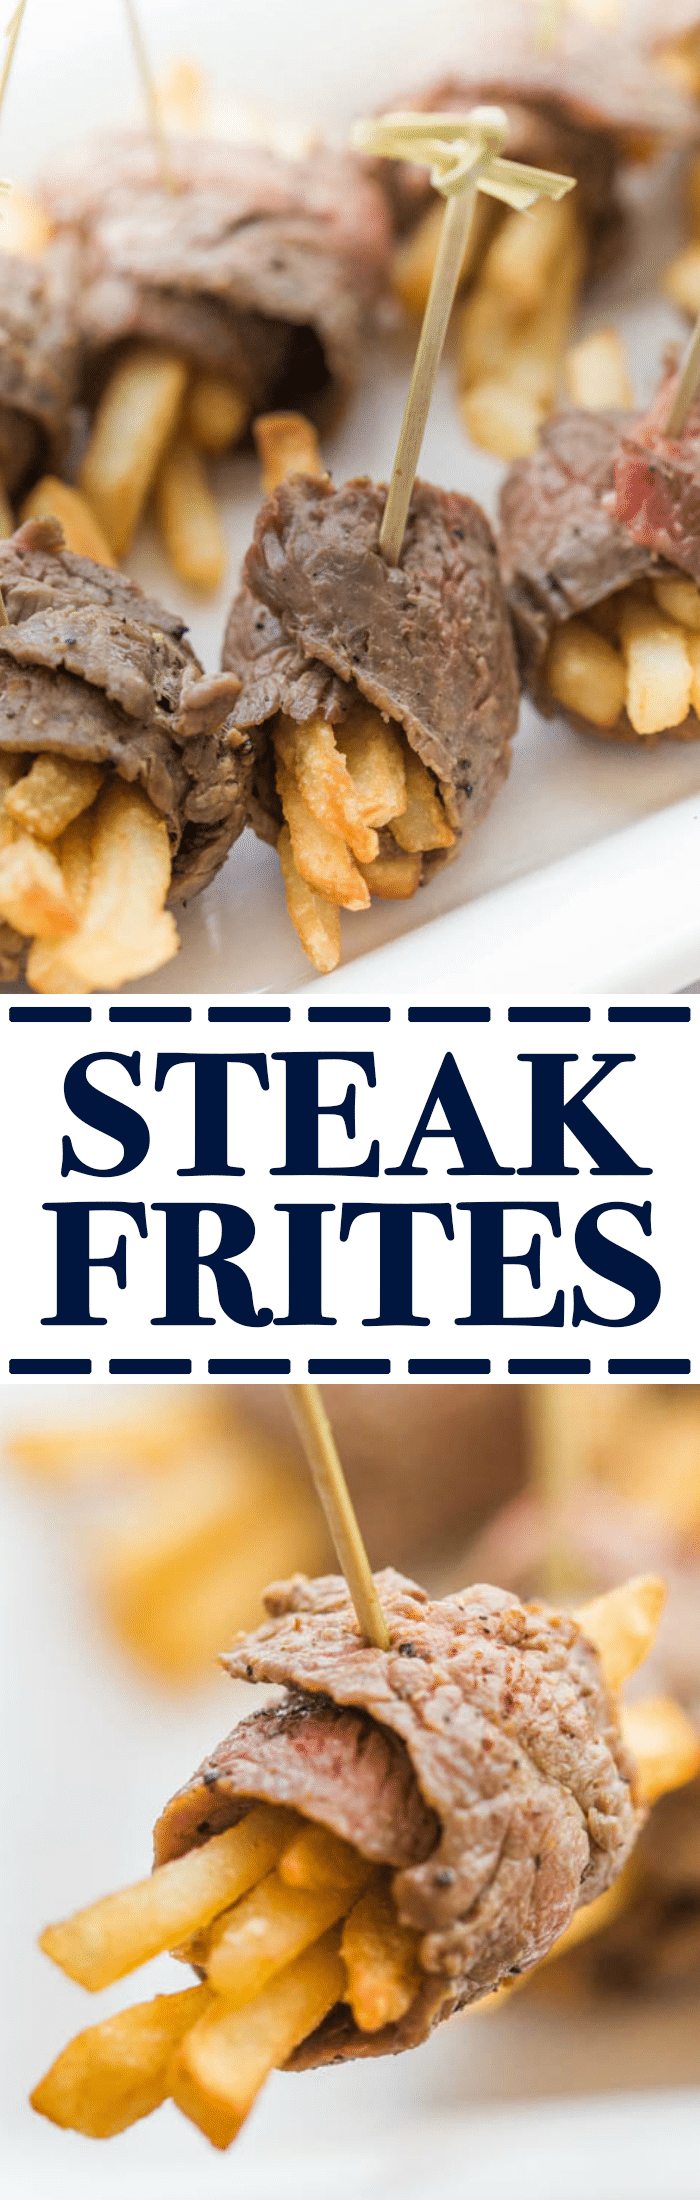 Steak-Frites